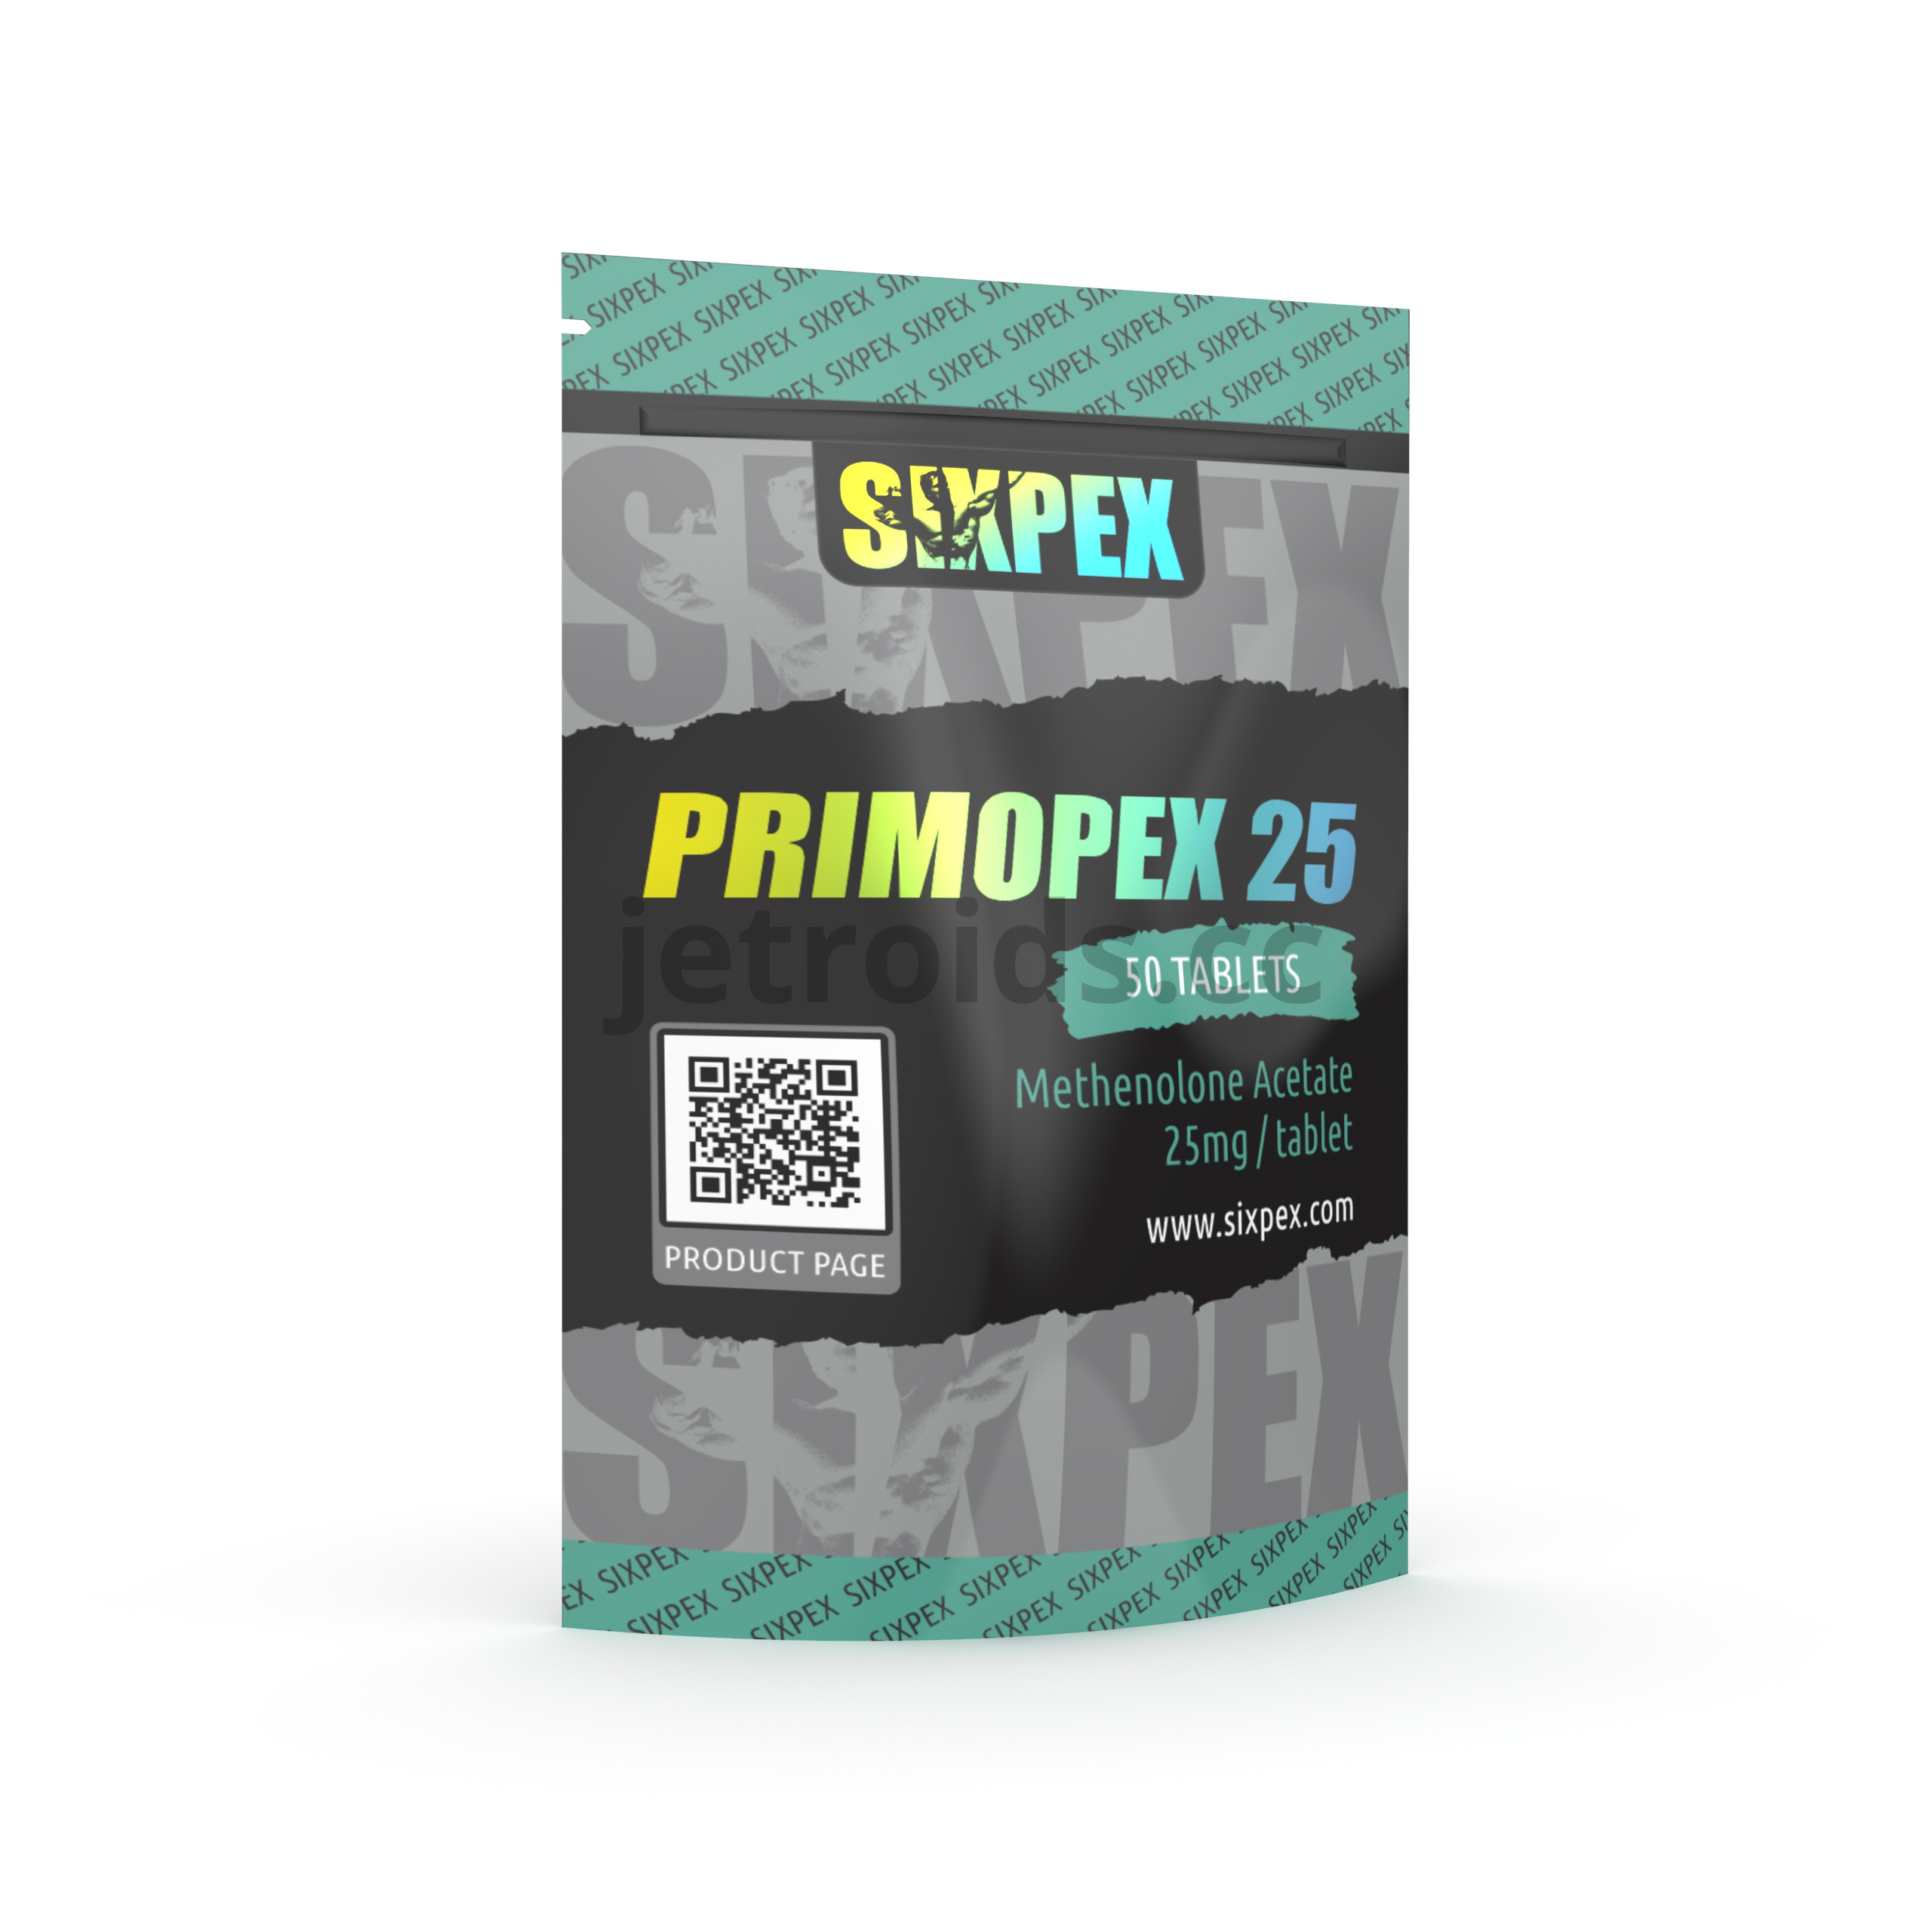 Sixpex Primopex 25 Product Info